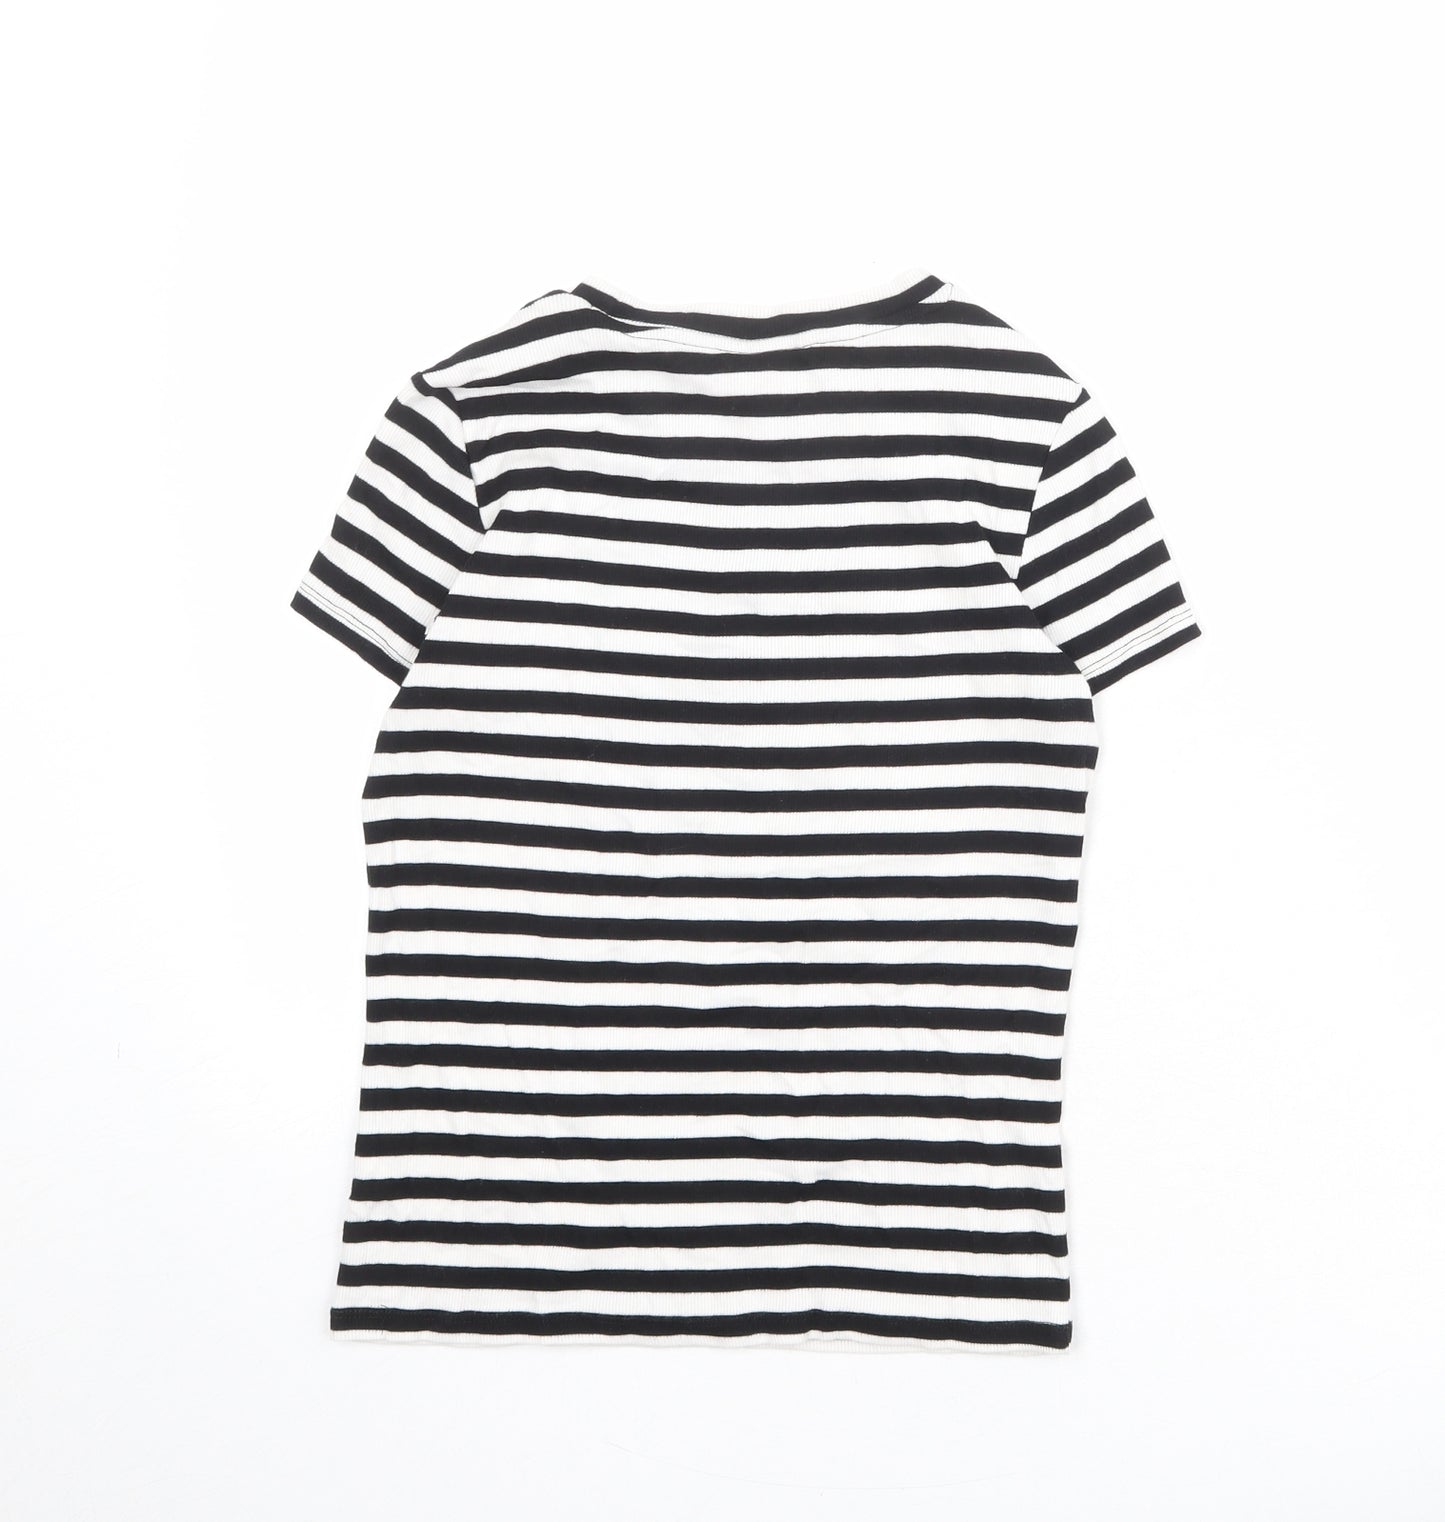 Monki Womens Black Striped Cotton Basic T-Shirt Size S Boat Neck